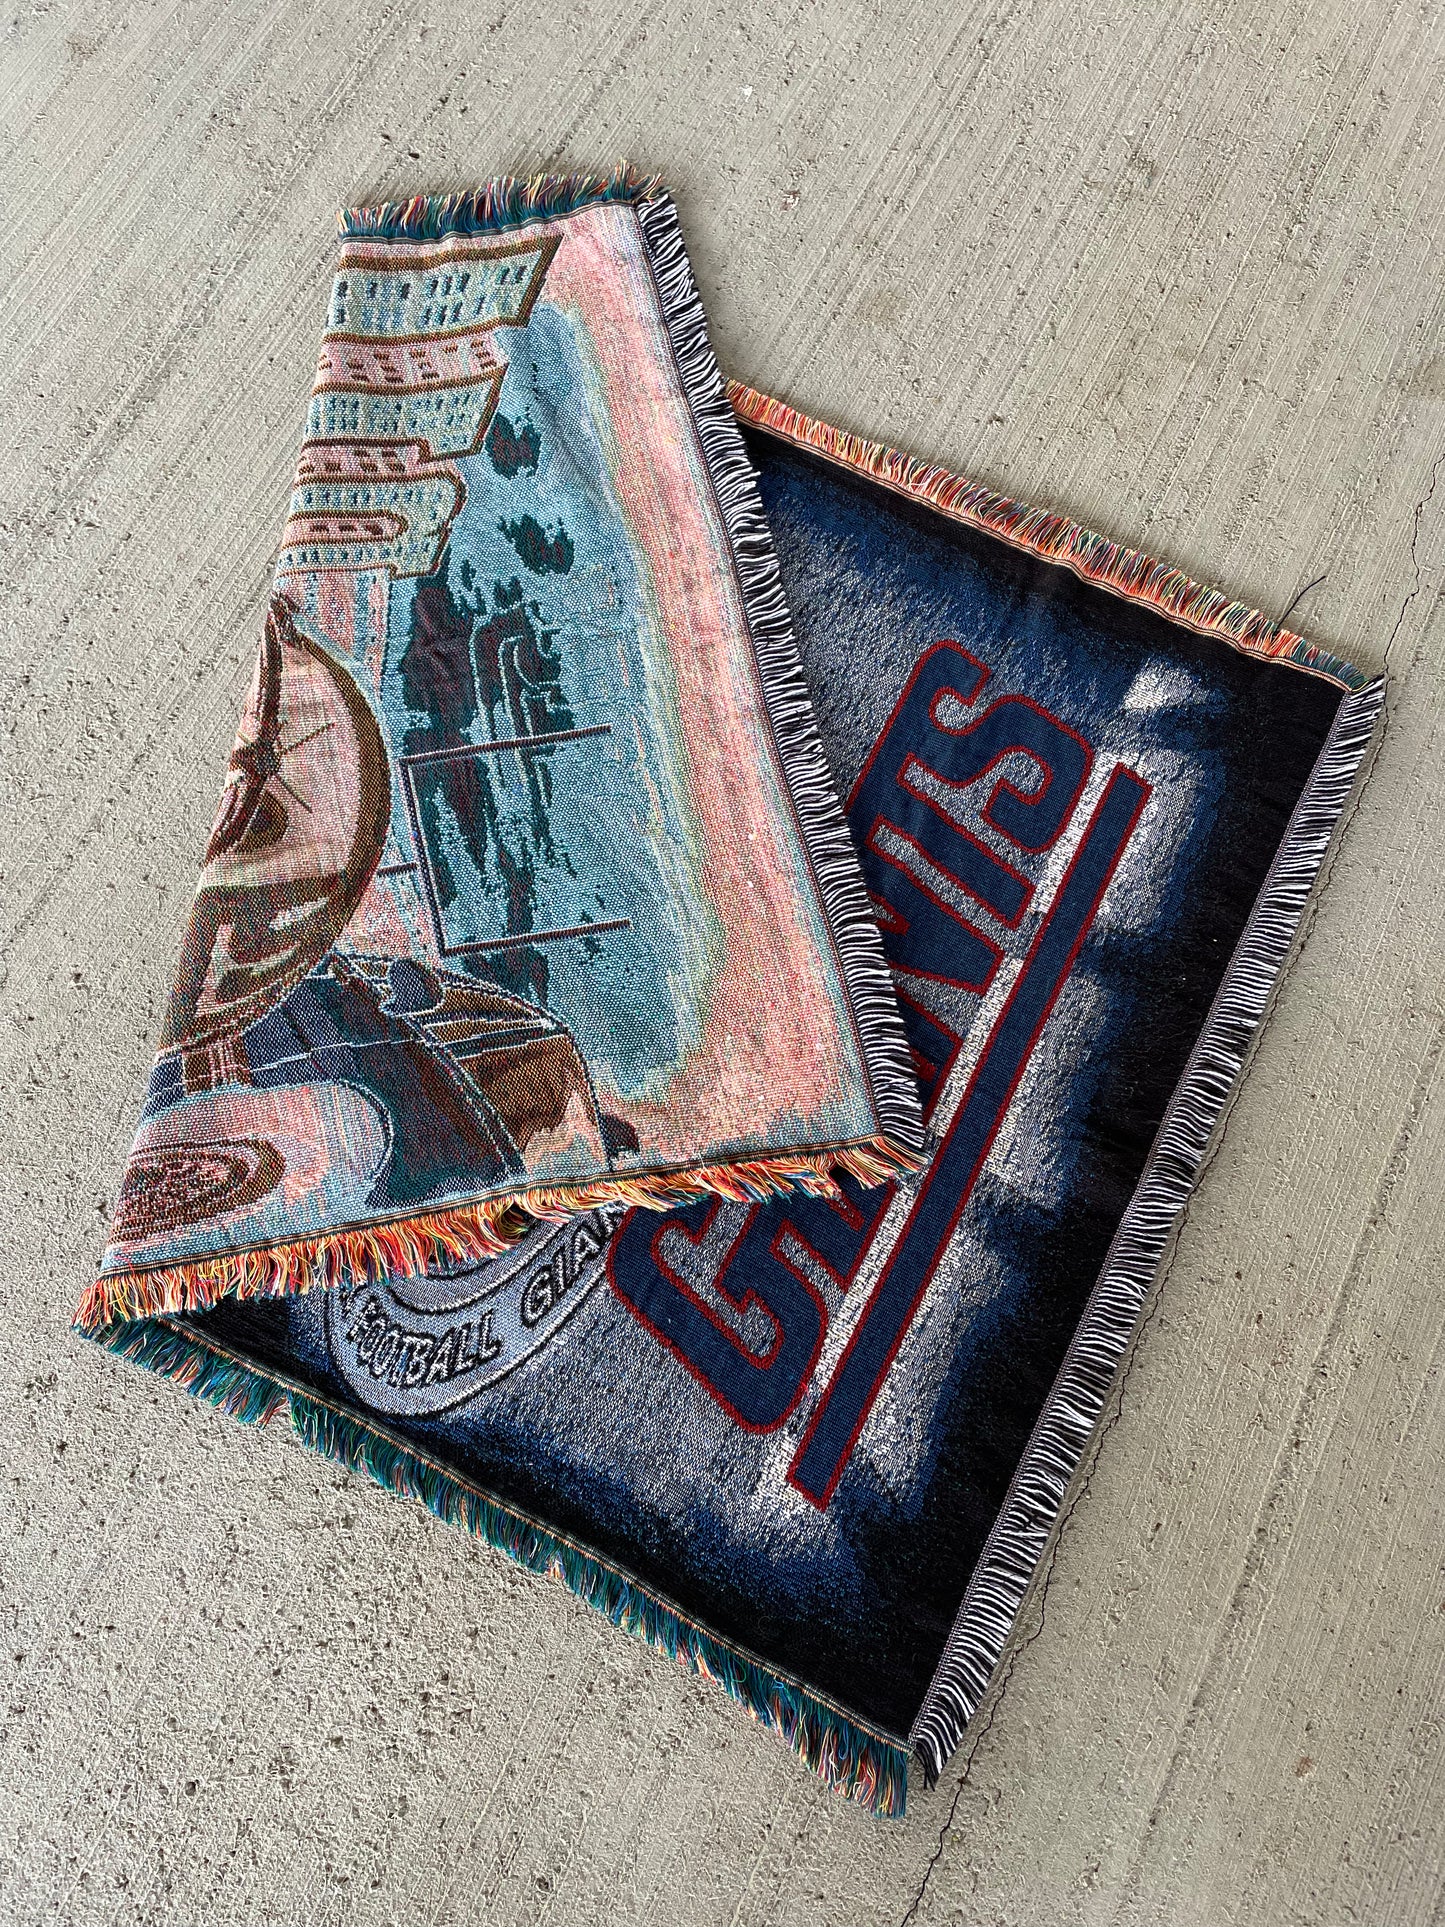 2000 NY Giants Tapestry Blanket